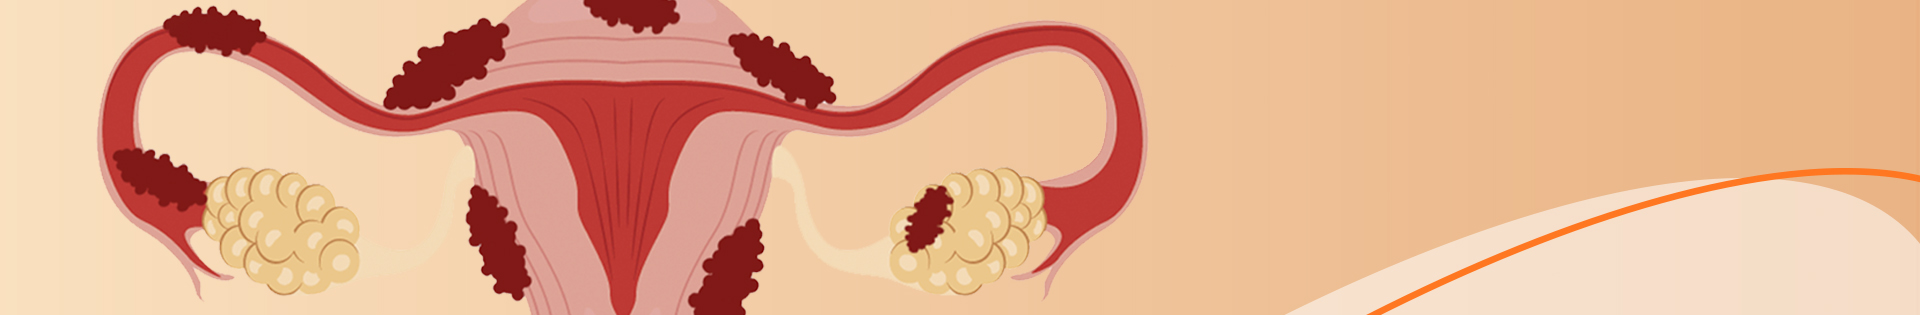 Endometriose profunda: veja os sintomas